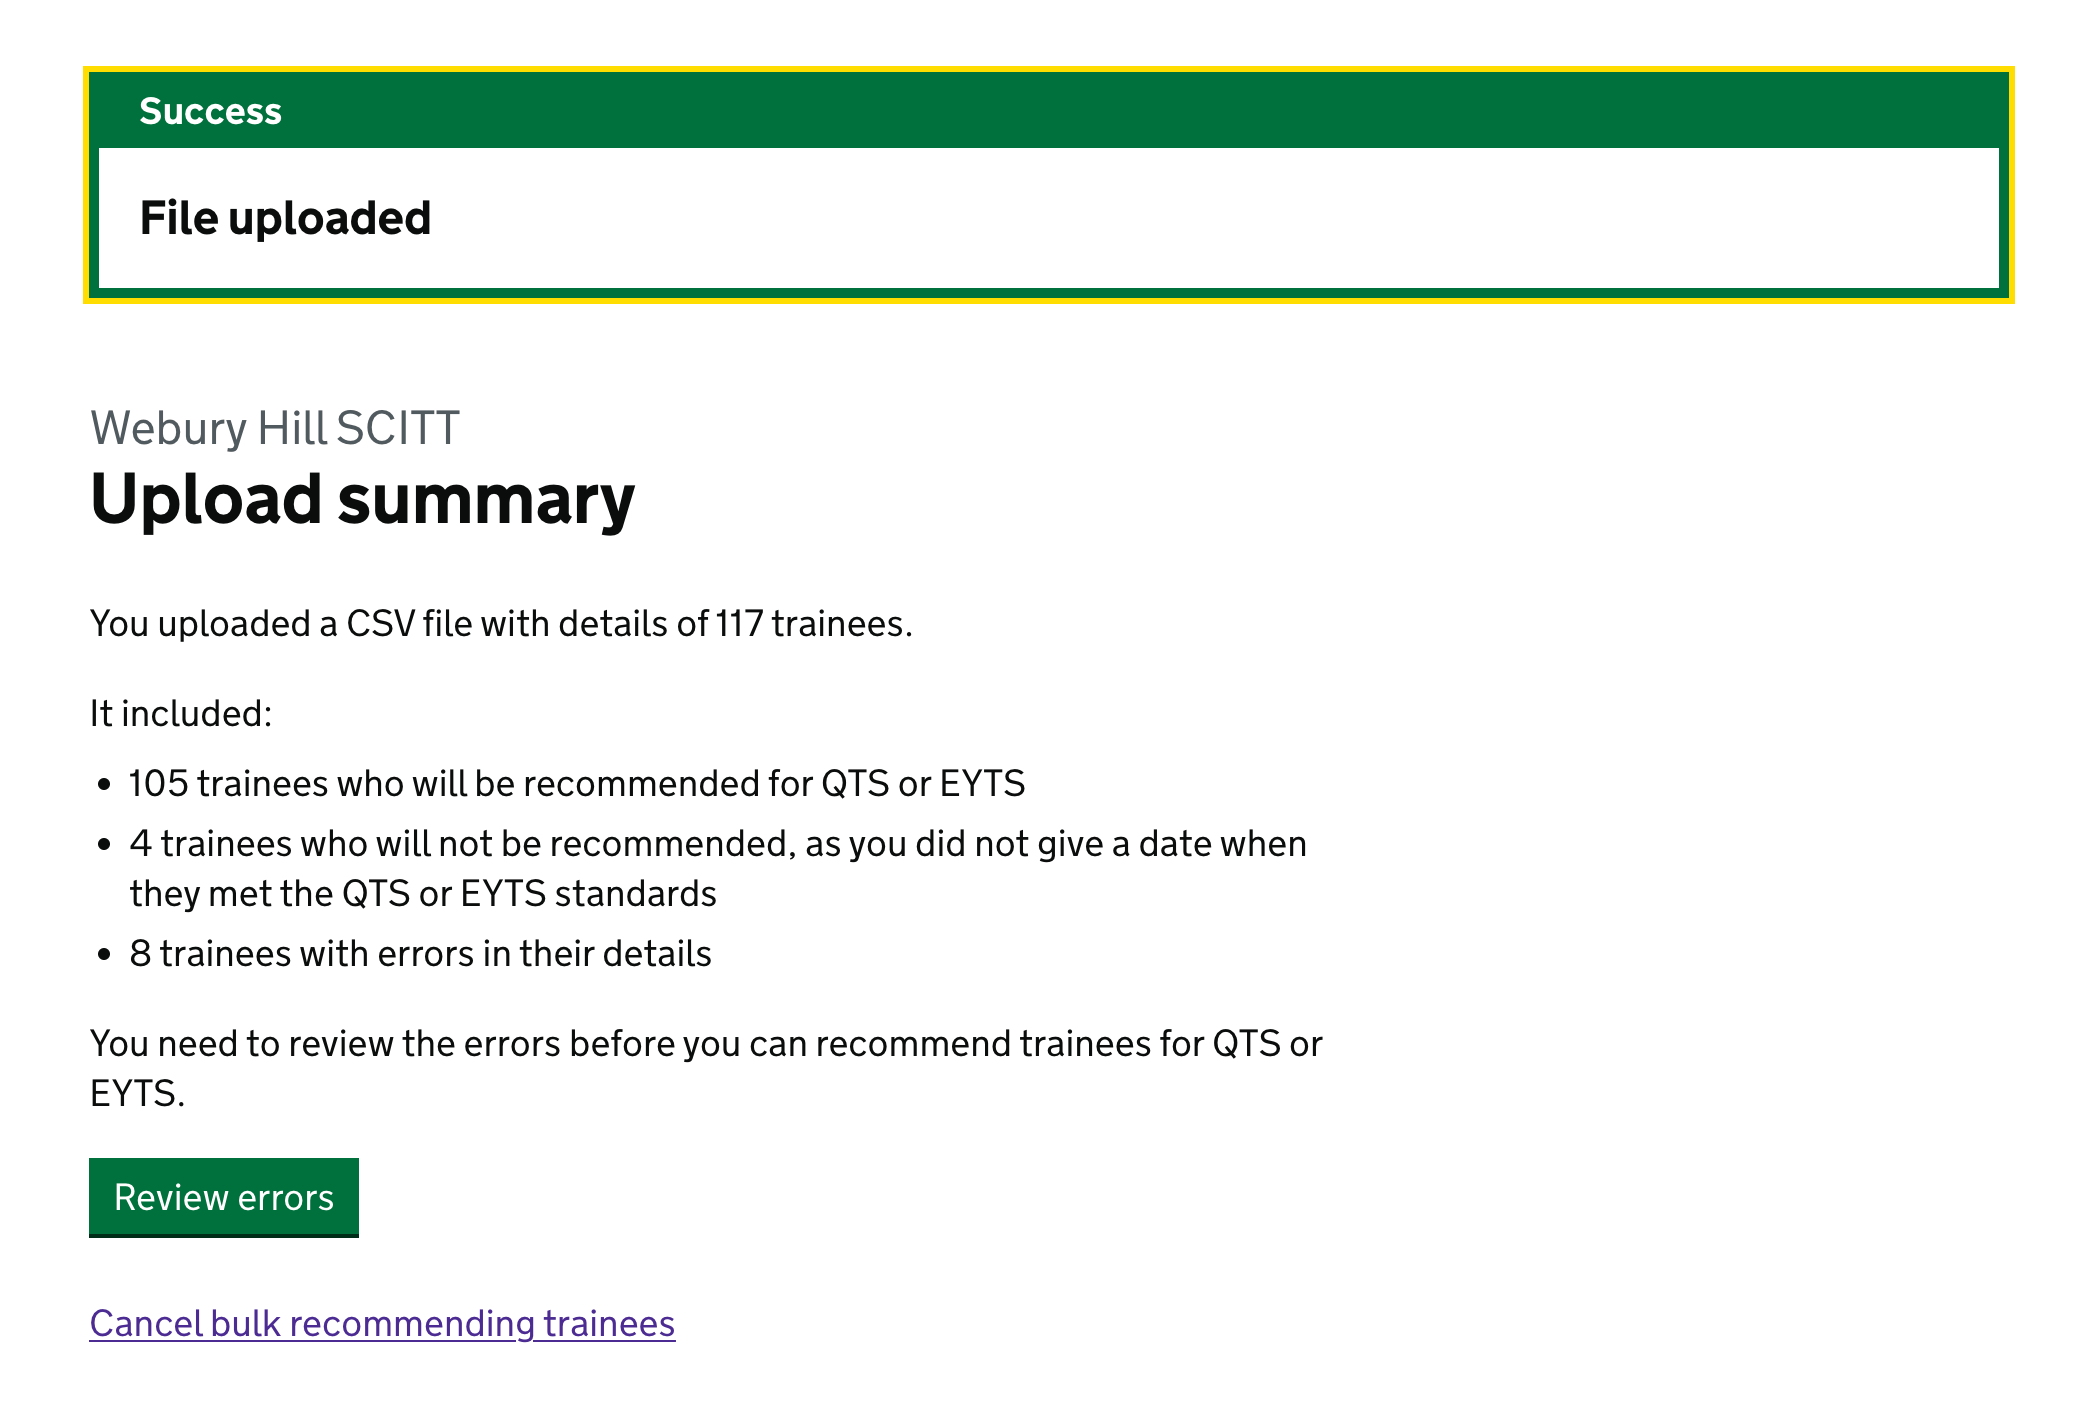 Screenshot of Upload summary showing errors